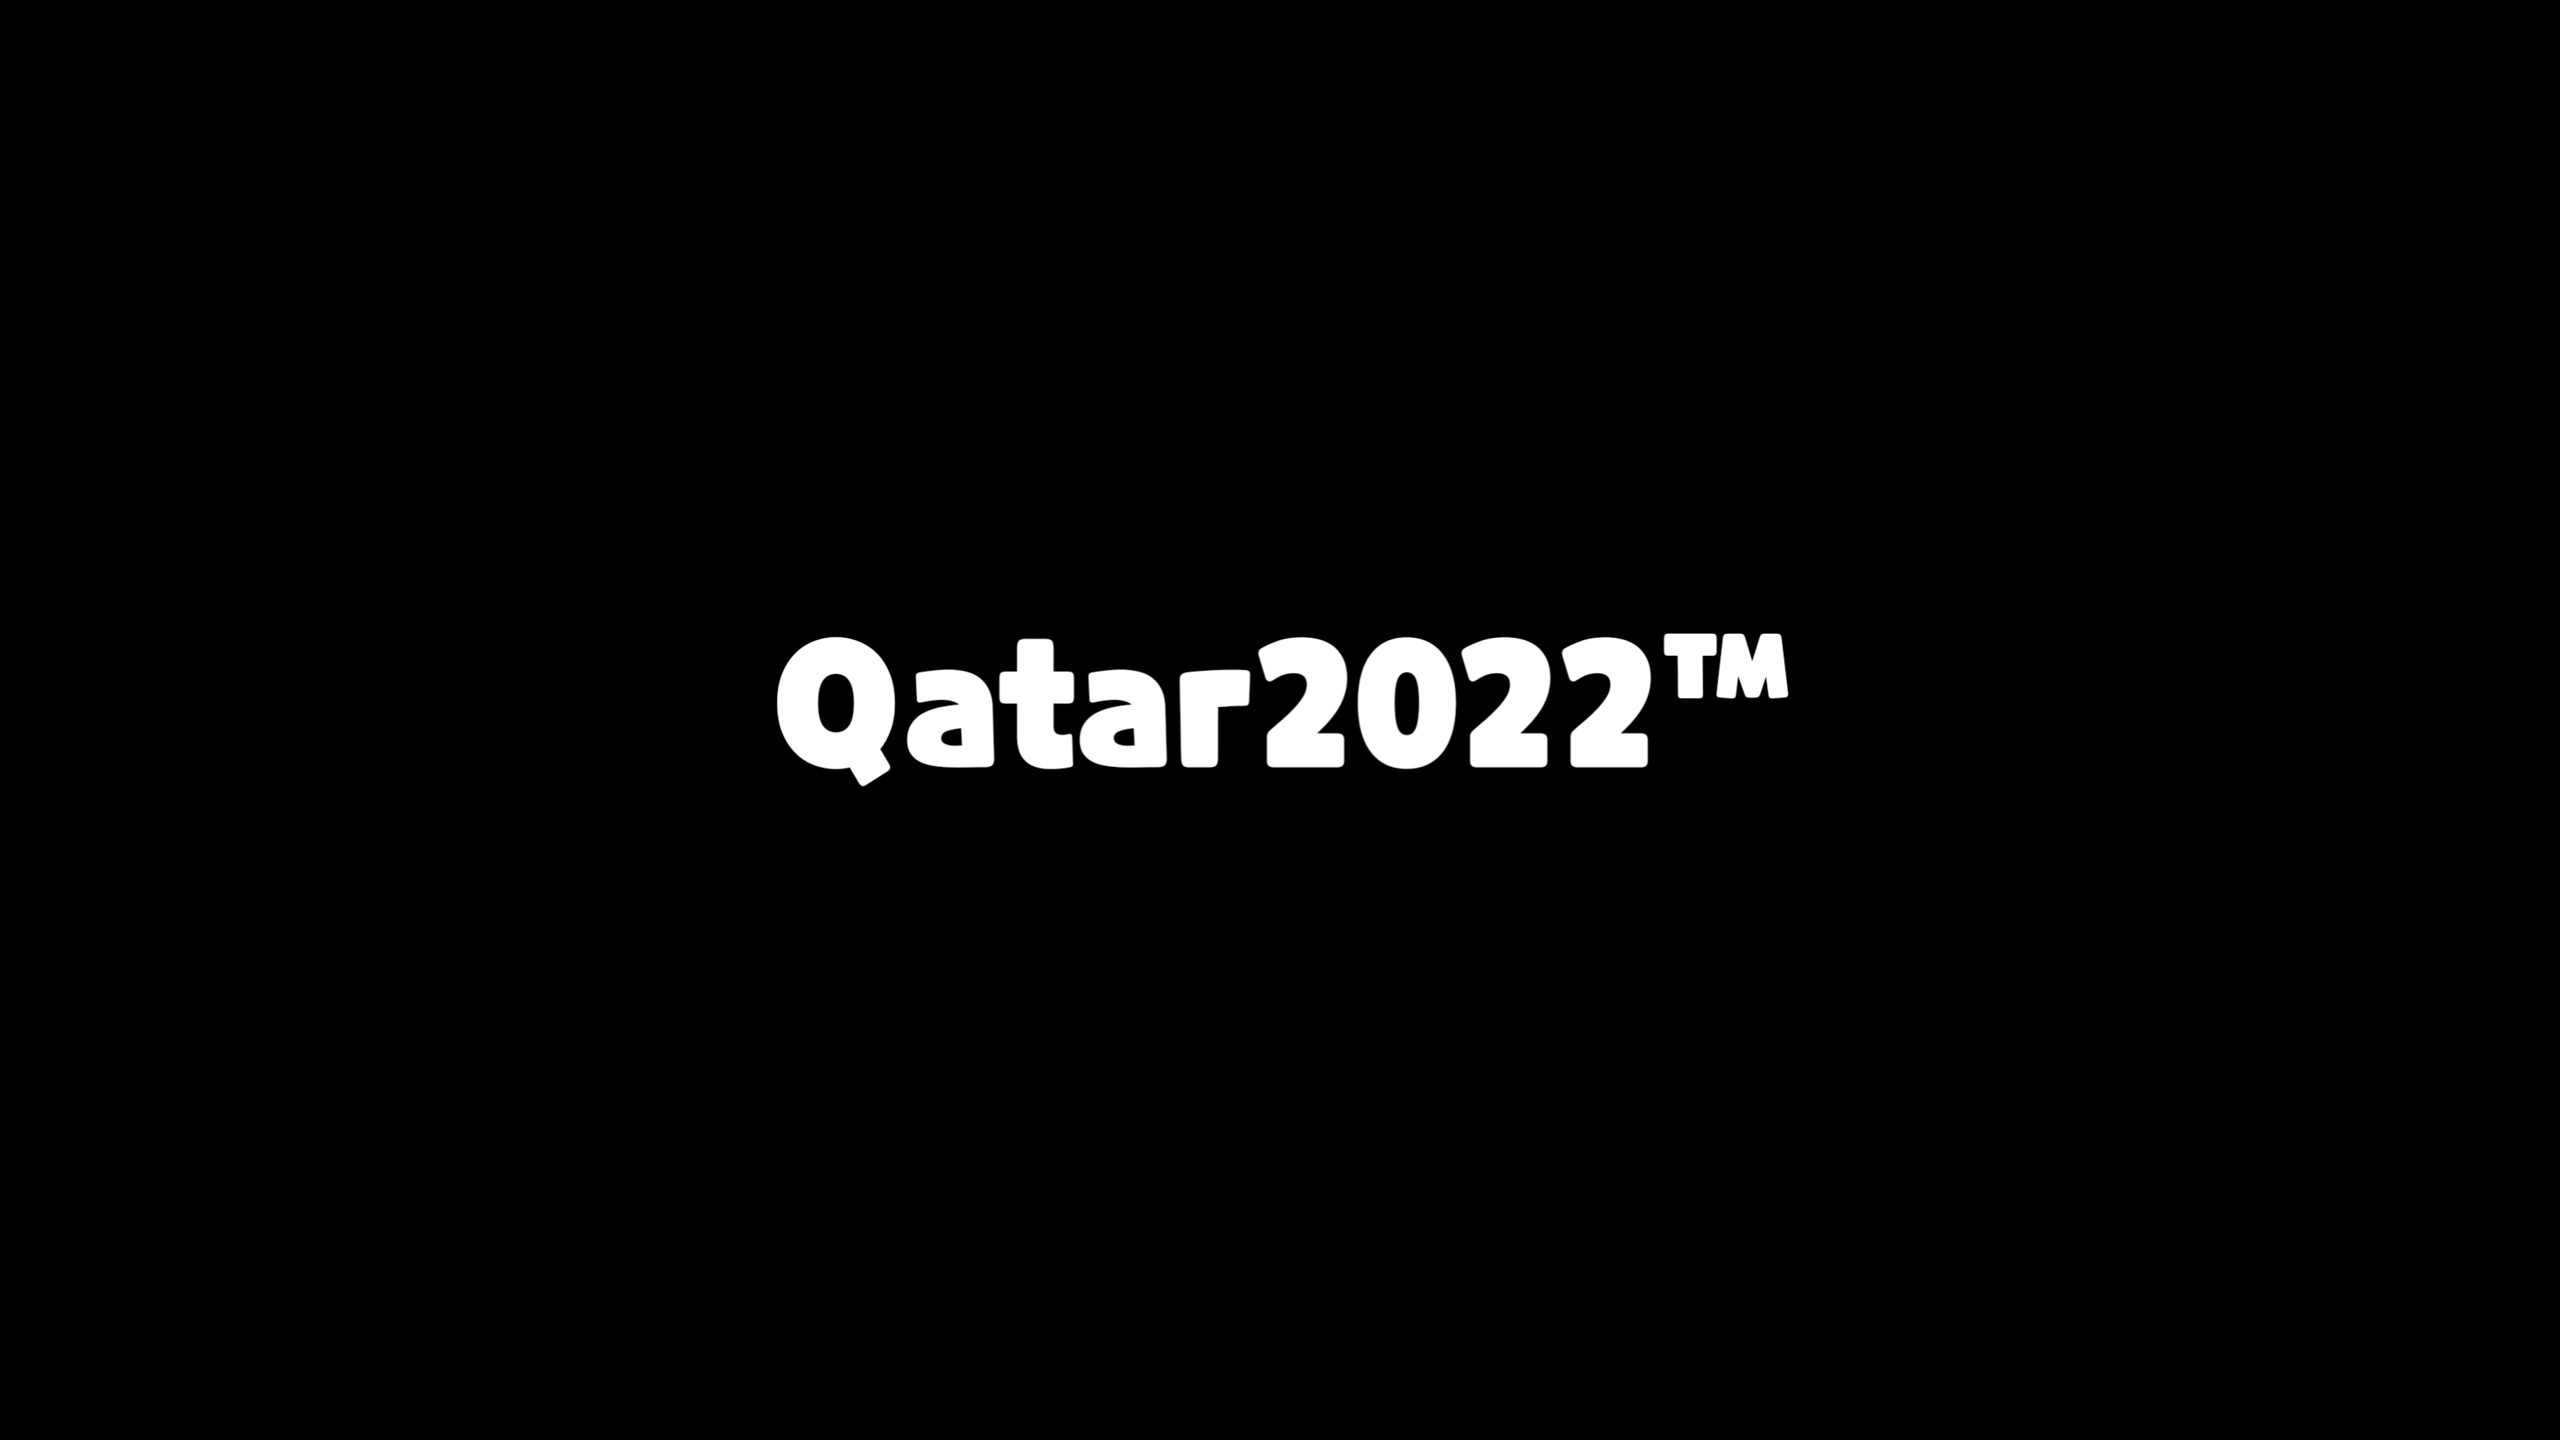 QATAR2022